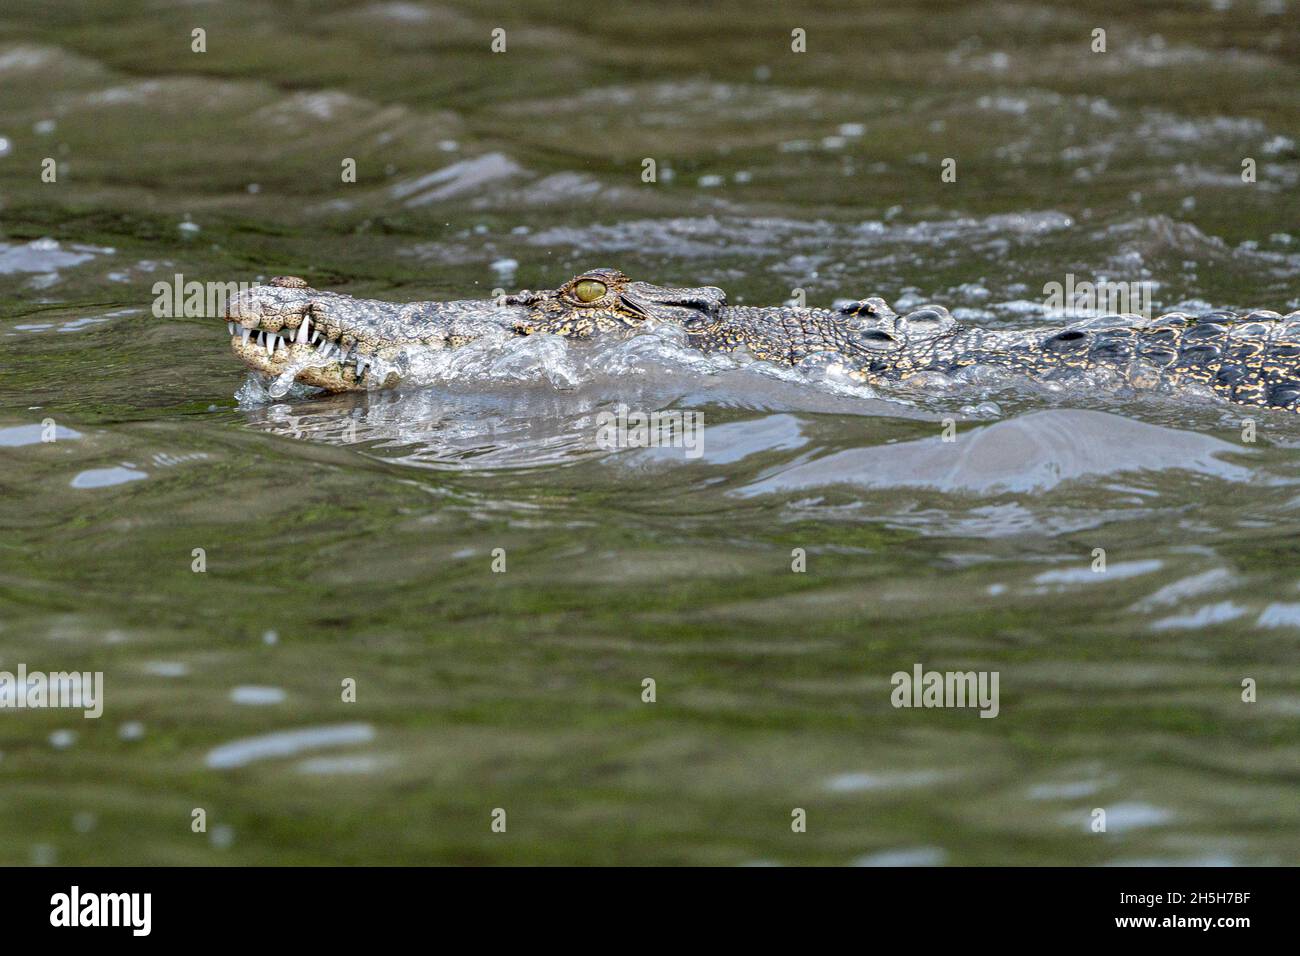 Estuarine crocodile or saltwater crocodile (Crocodylus porosus) swimming in muddy water. North Queensland, Australia Stock Photo